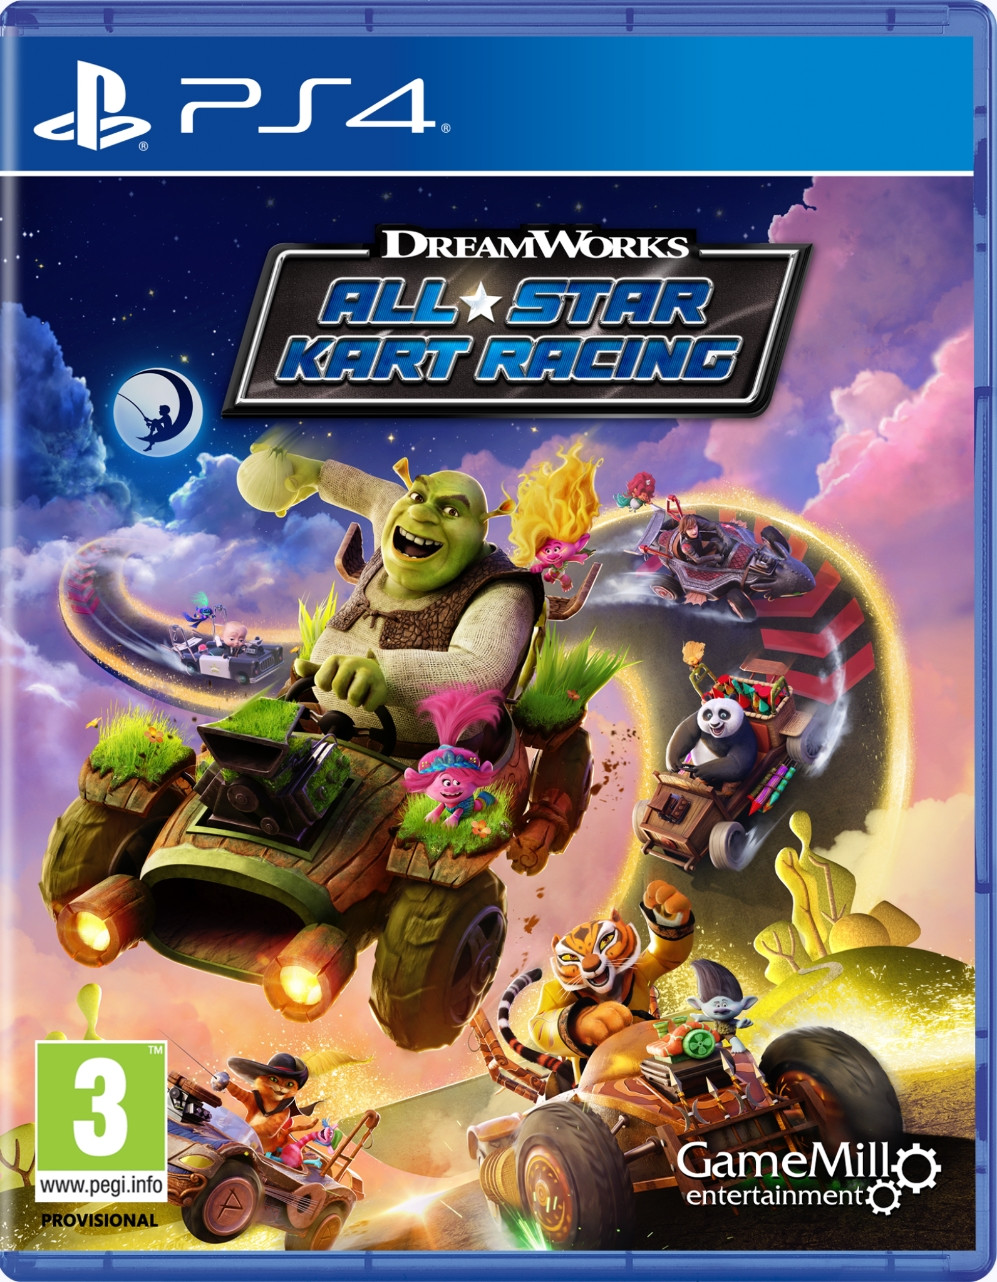 Dreamworks All-Star Kart Racing (PS4), GameMill Entertainment